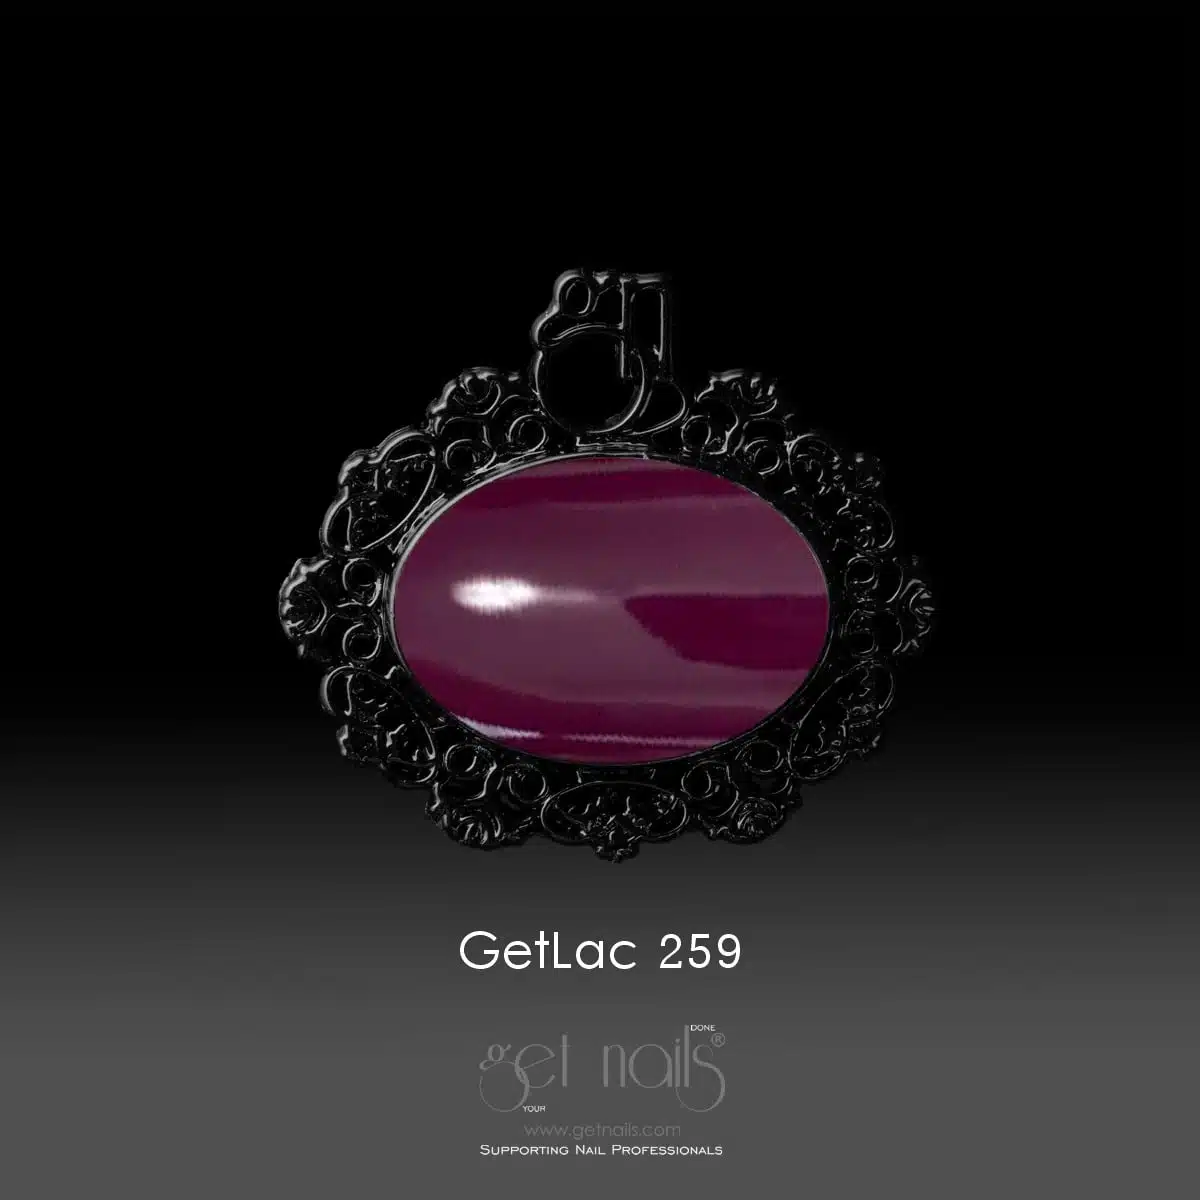 Get Nails Austria - GetLac 259 15 g